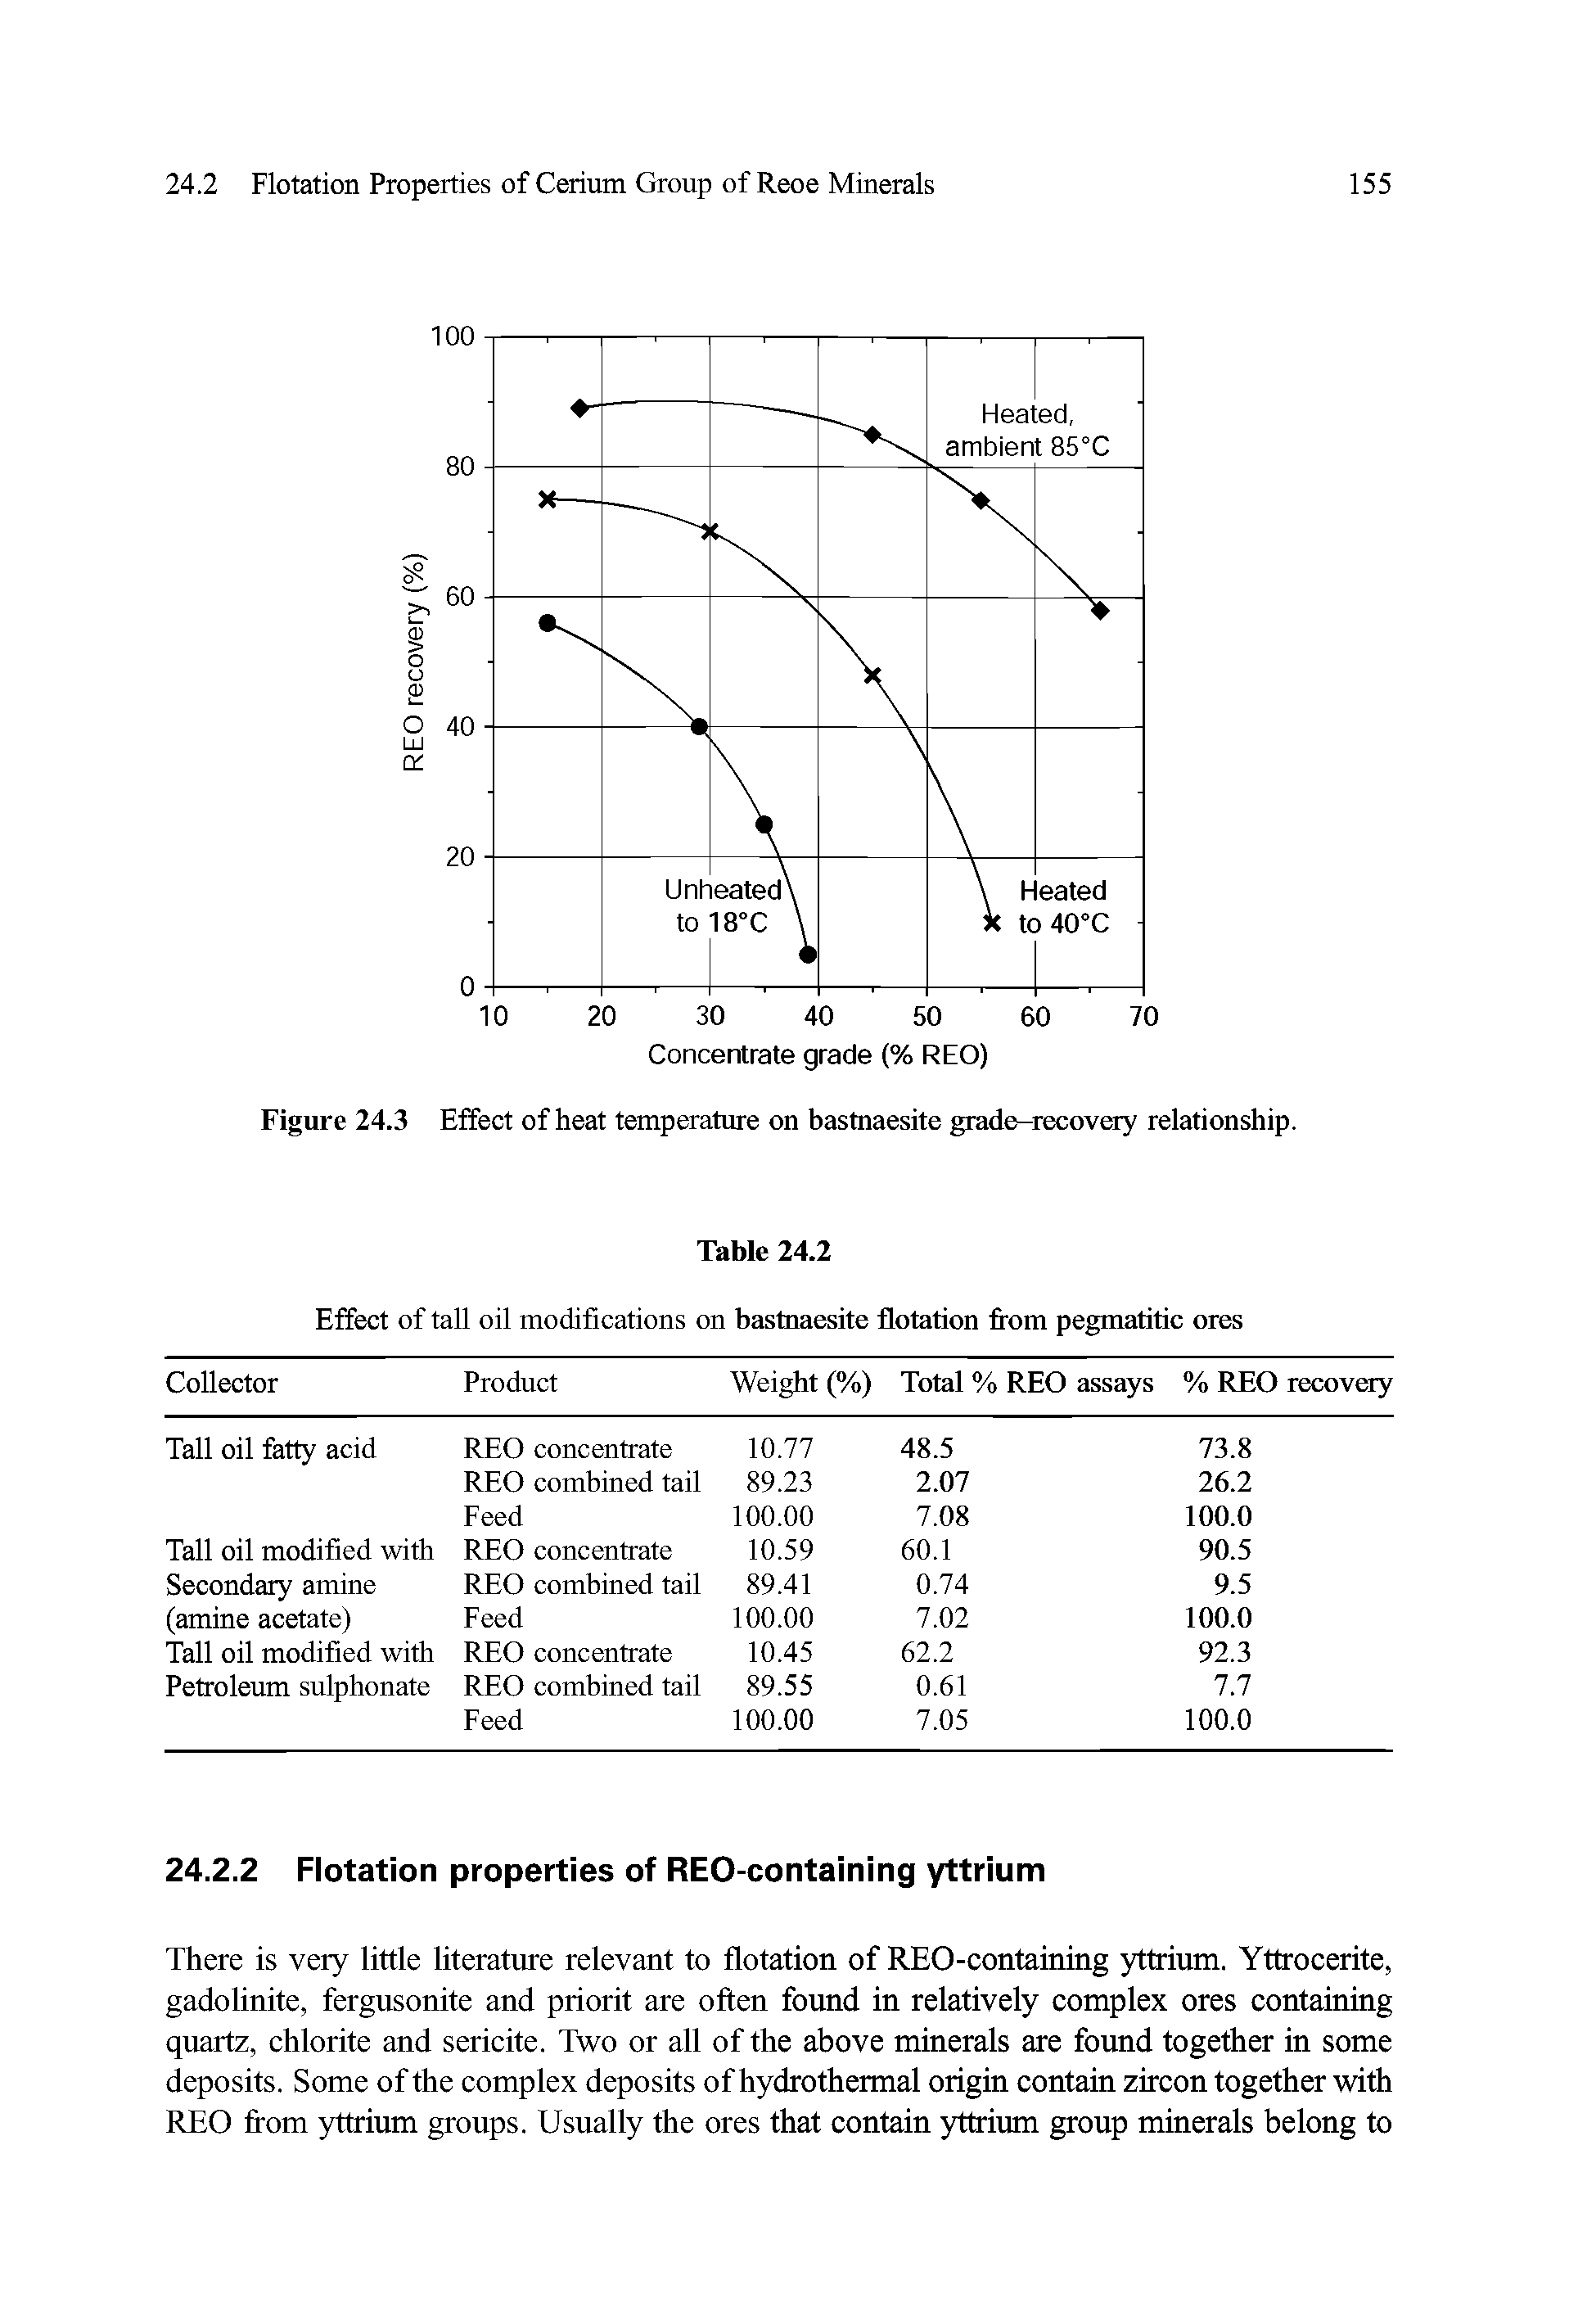 Figure 24.3 Effect of heat temperature on bastnaesite grade-recovery relationship.